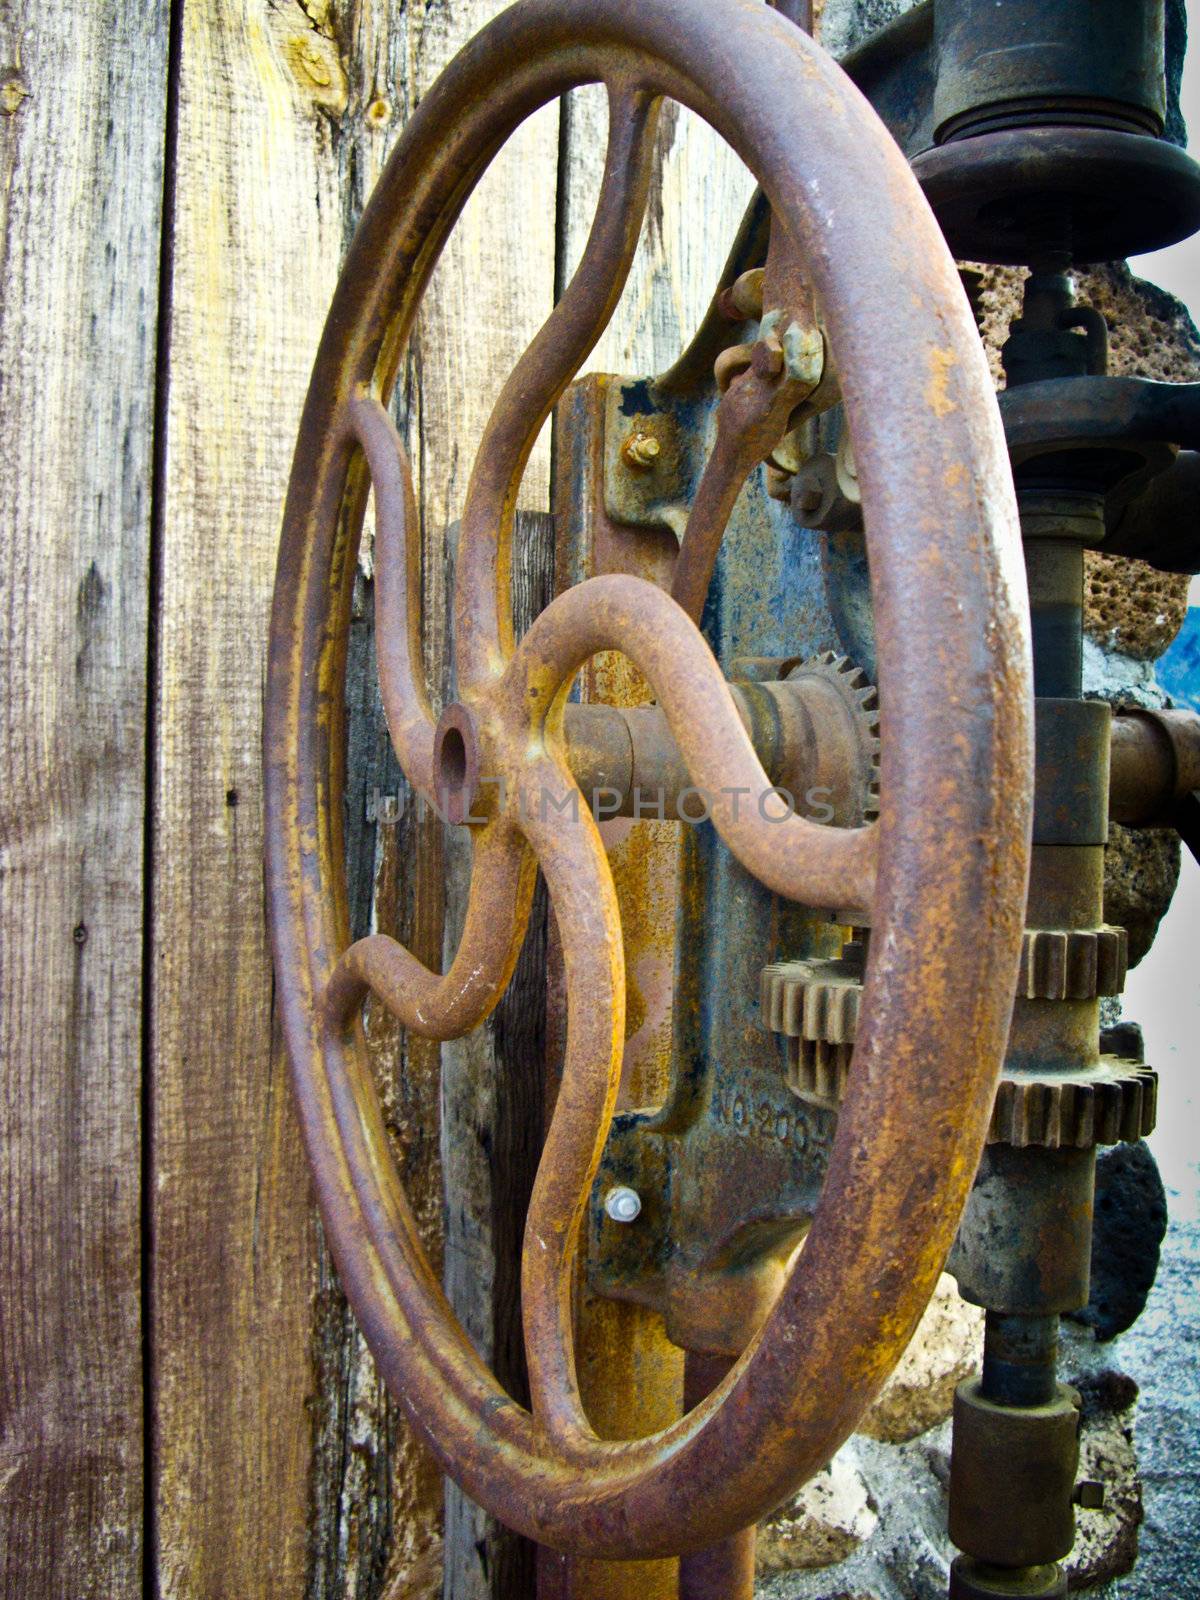 Old drill press wheel by emattil